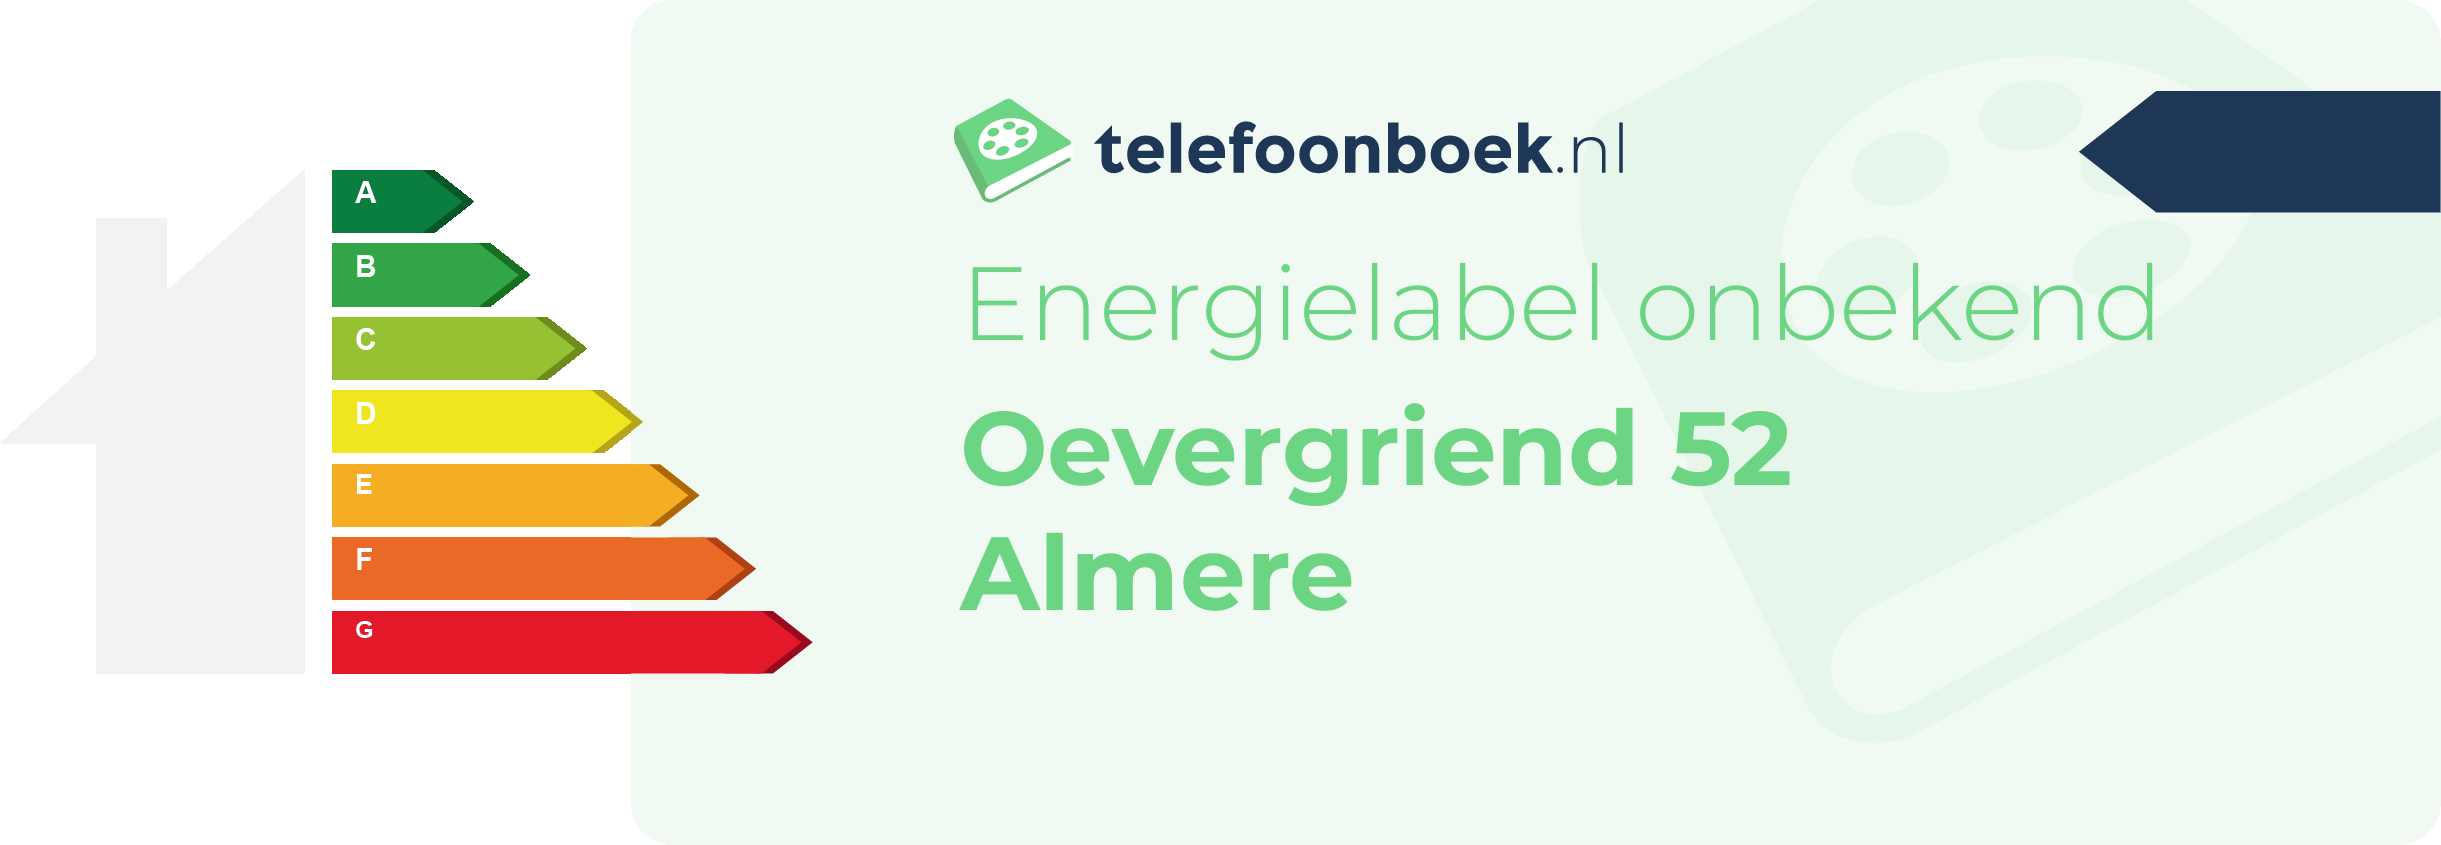 Energielabel Oevergriend 52 Almere